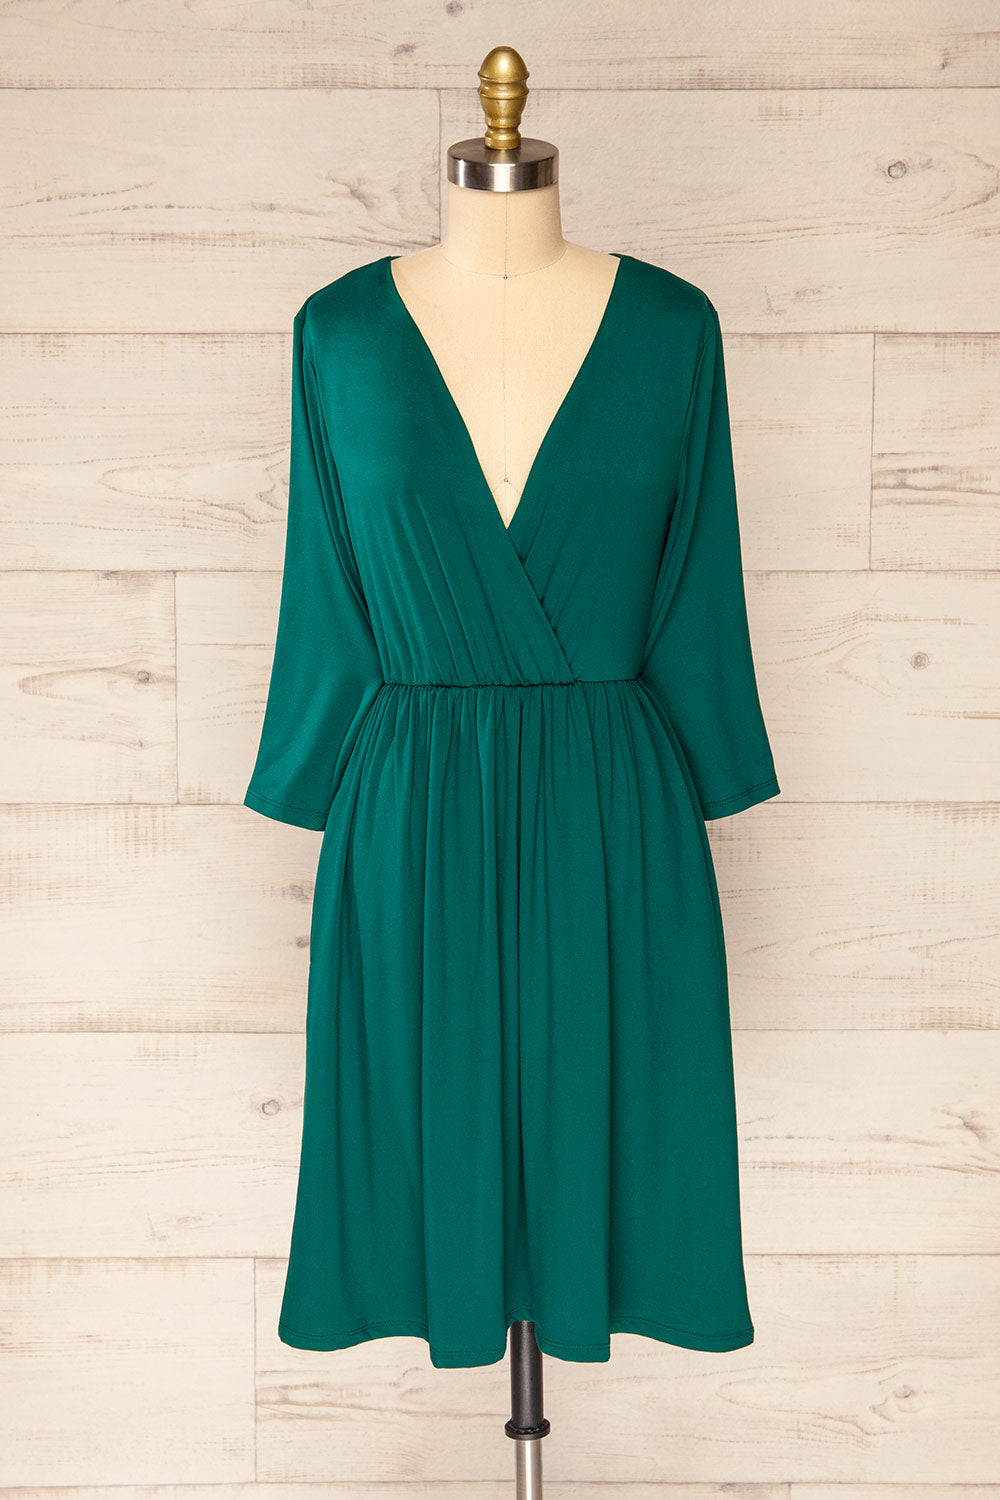 Hemili Emerald Green Wrap Neckline Short Dress | La petite garçonne front view 